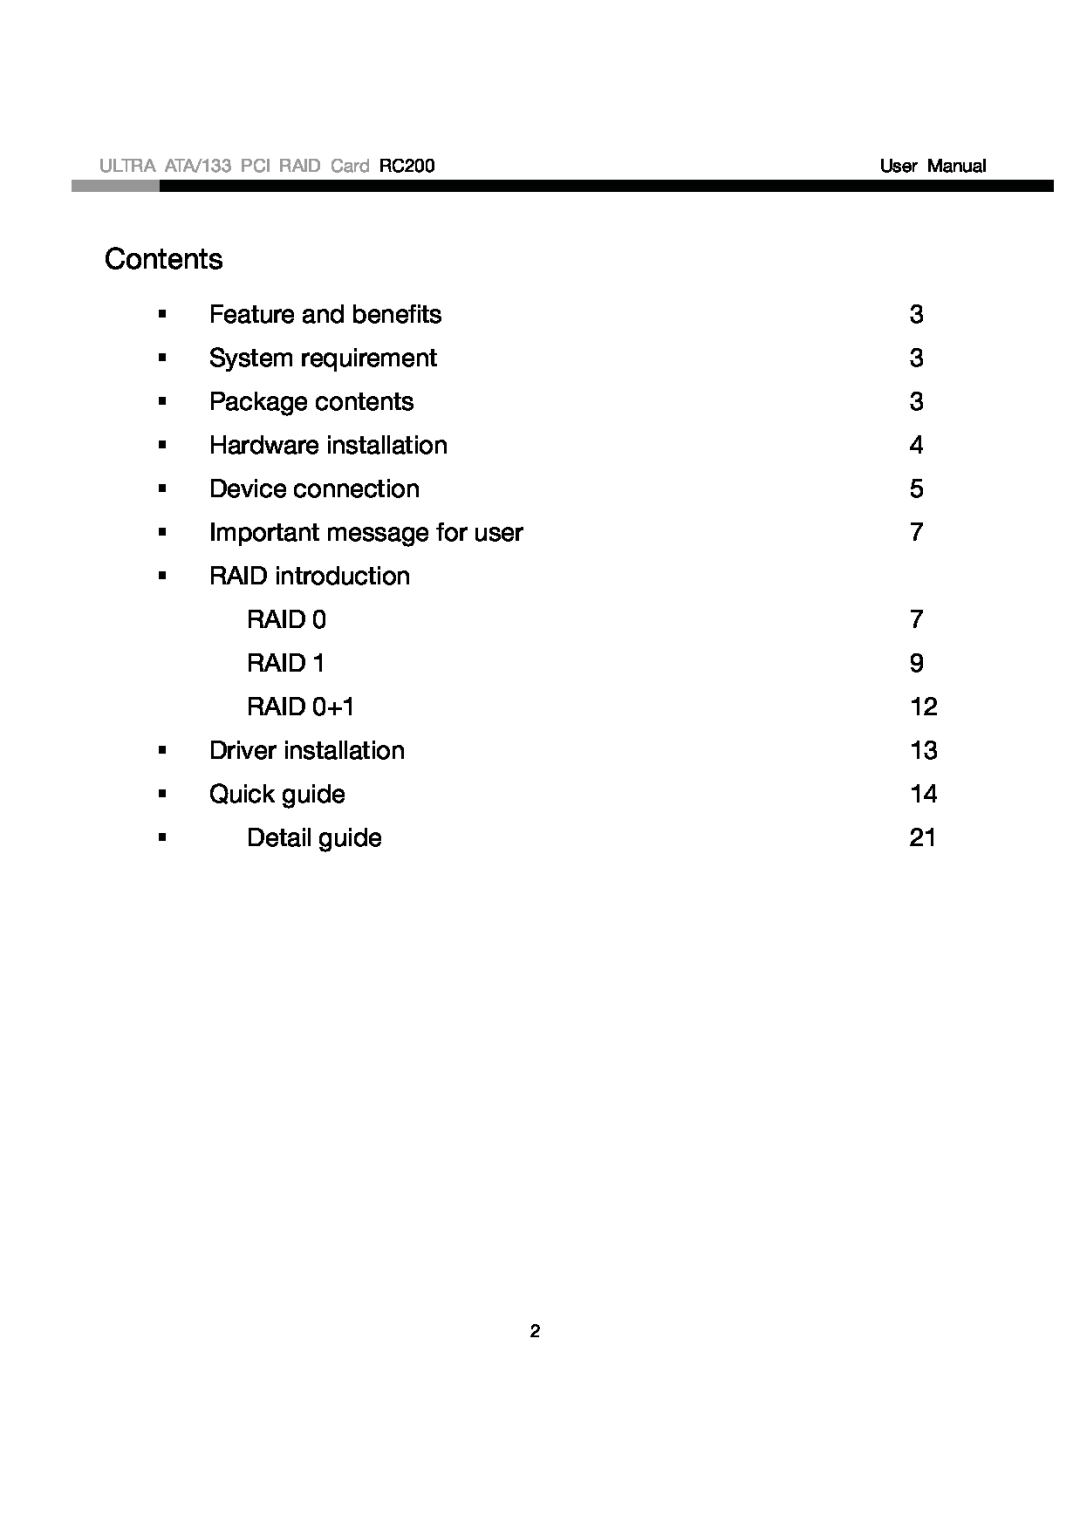 Rosewill user manual Contents, ULTRA ATA/133 PCI RAID Card RC200 